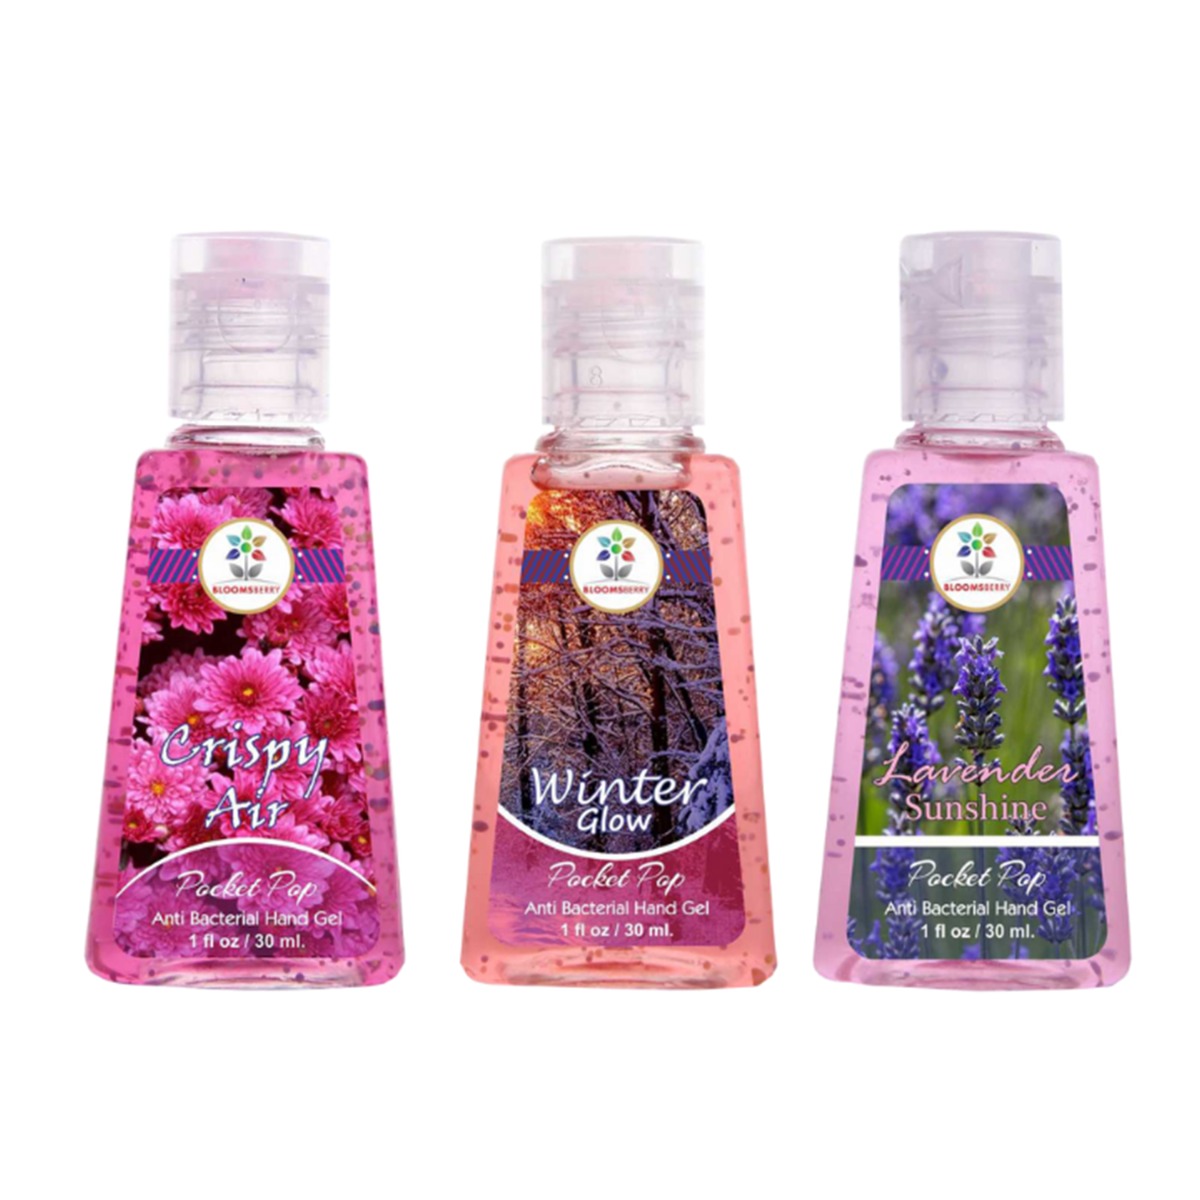 Bloomsberry Crispy Air, Winter Glow, Lavender Sunshine Hand Sanitizer- Pack Of 3, 90ml